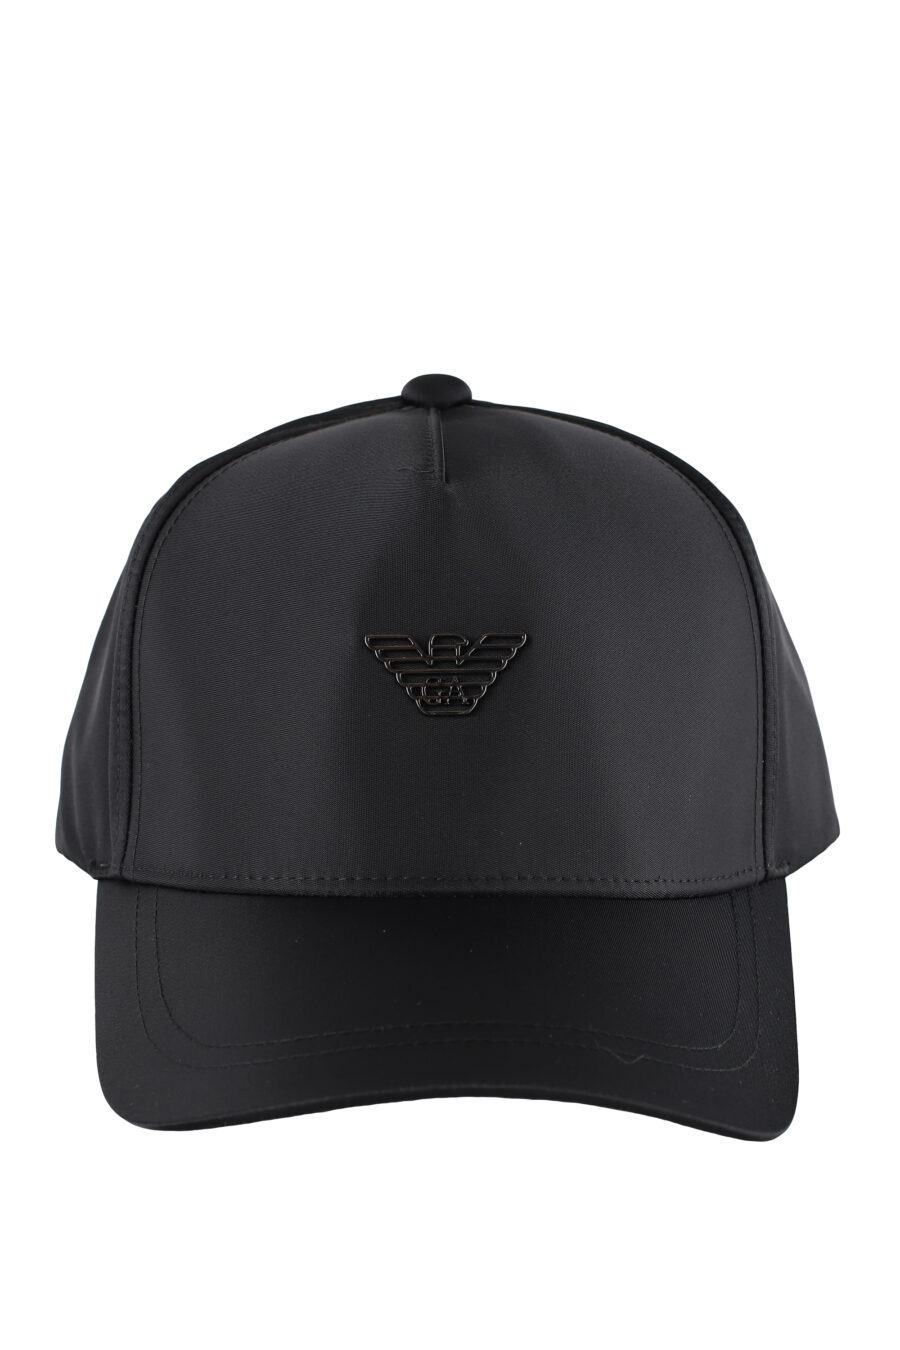 Schwarze Kappe mit Metalladler-Logo - IMG 5176